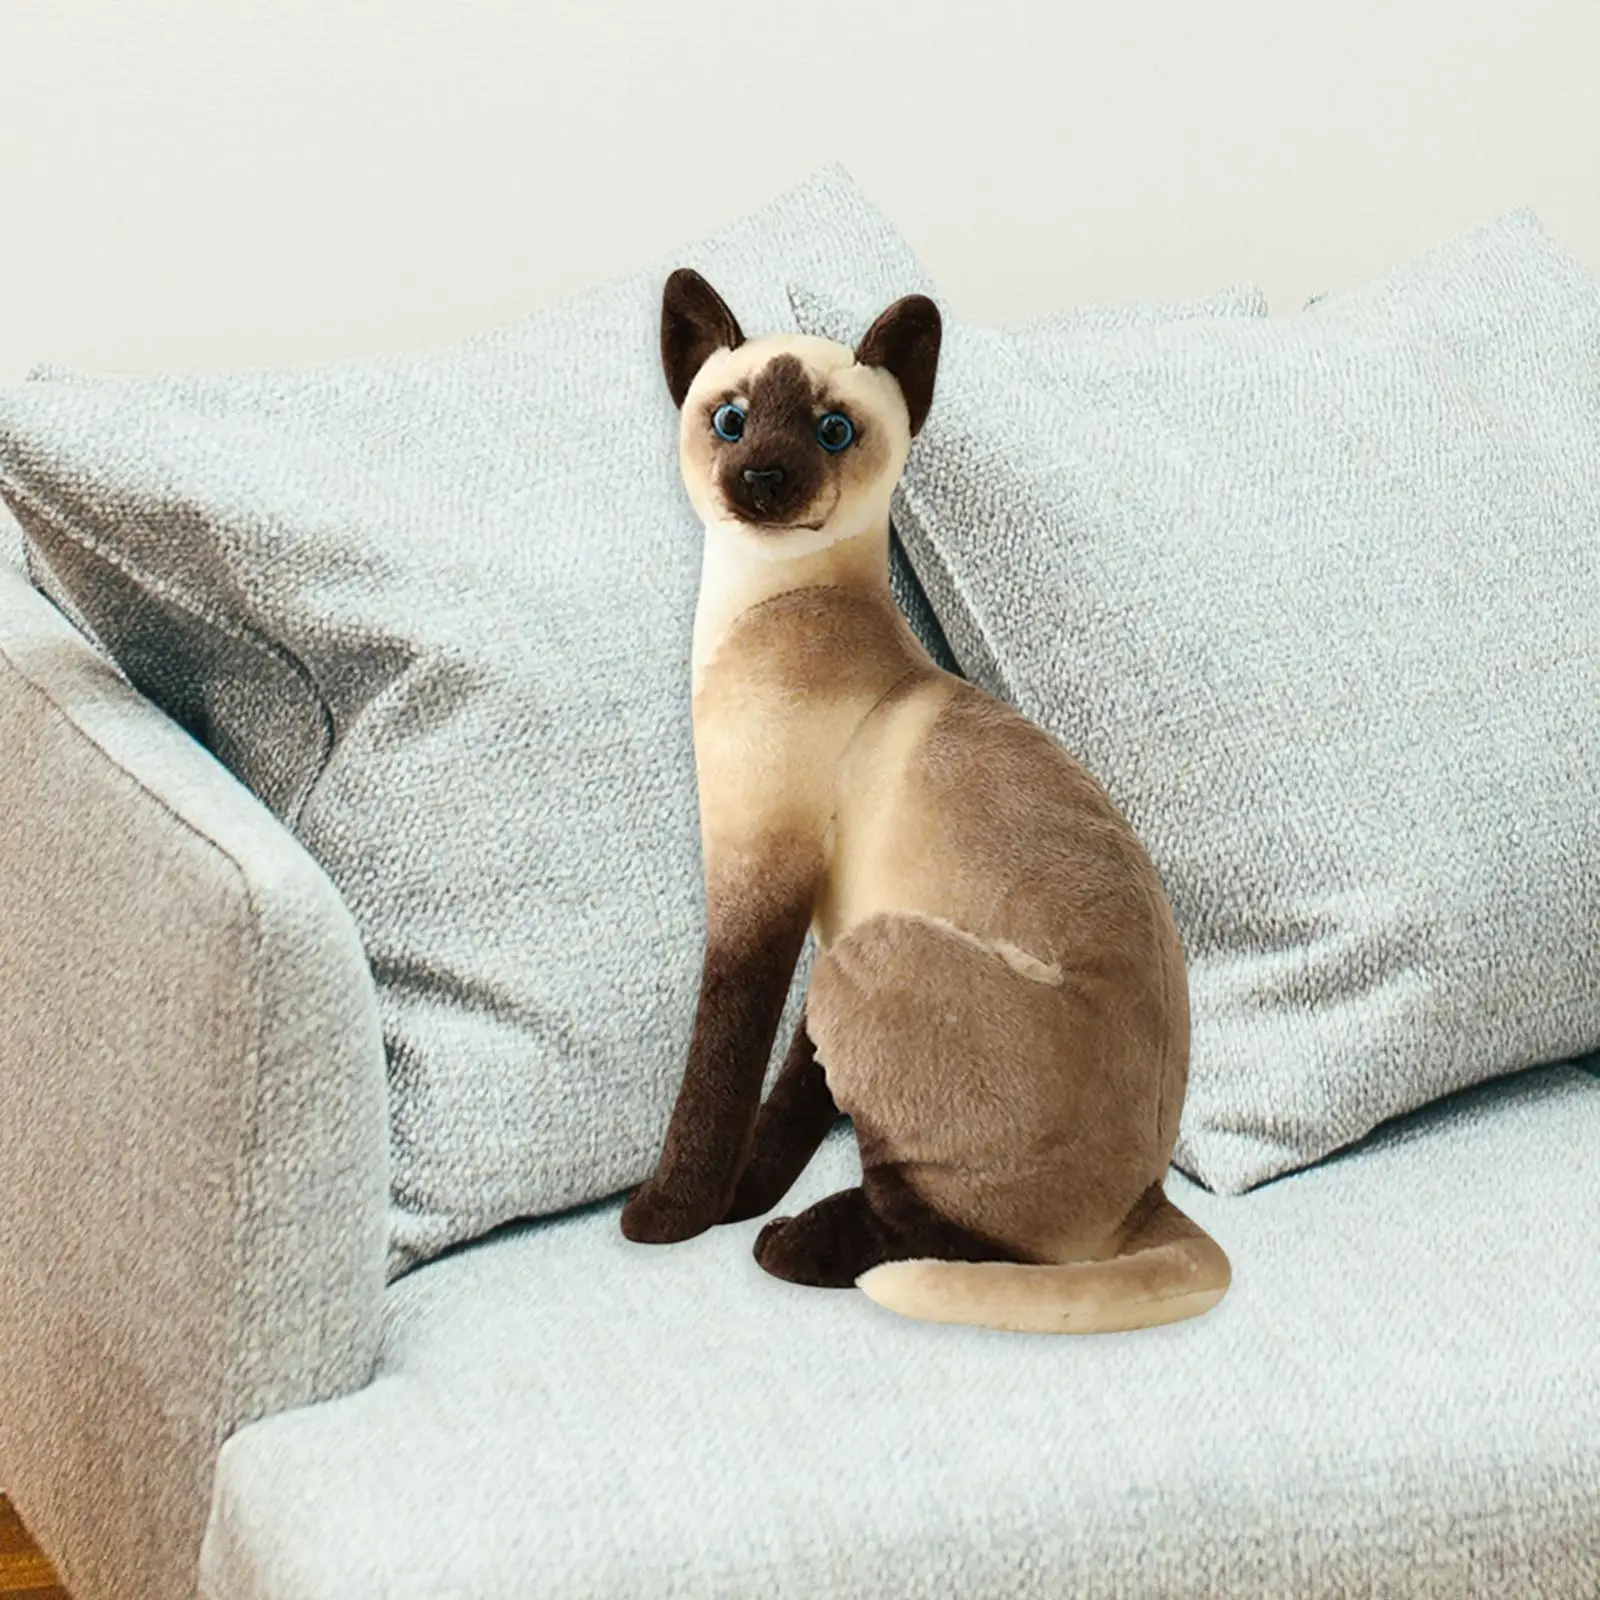 Simulation Siamese cats animal plush padding as a birthday gift